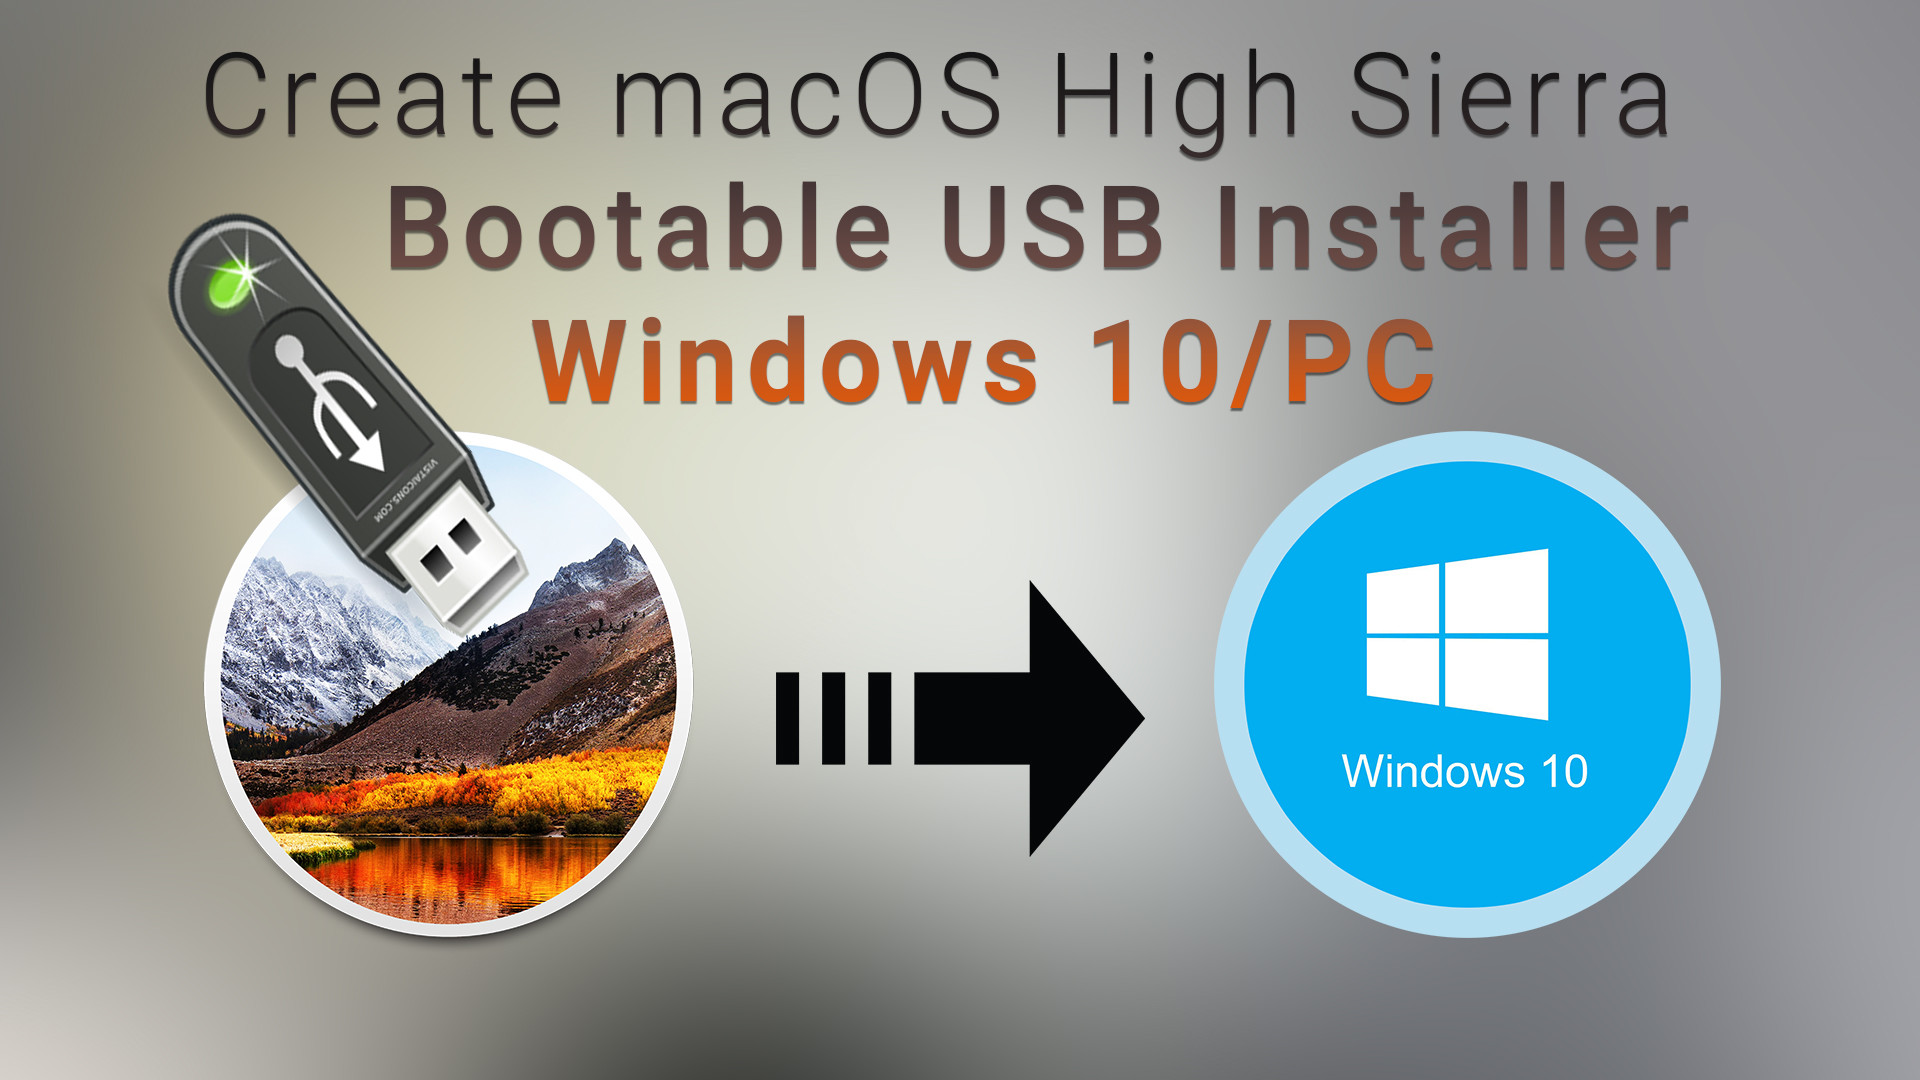 create bootable usb from dmg windows